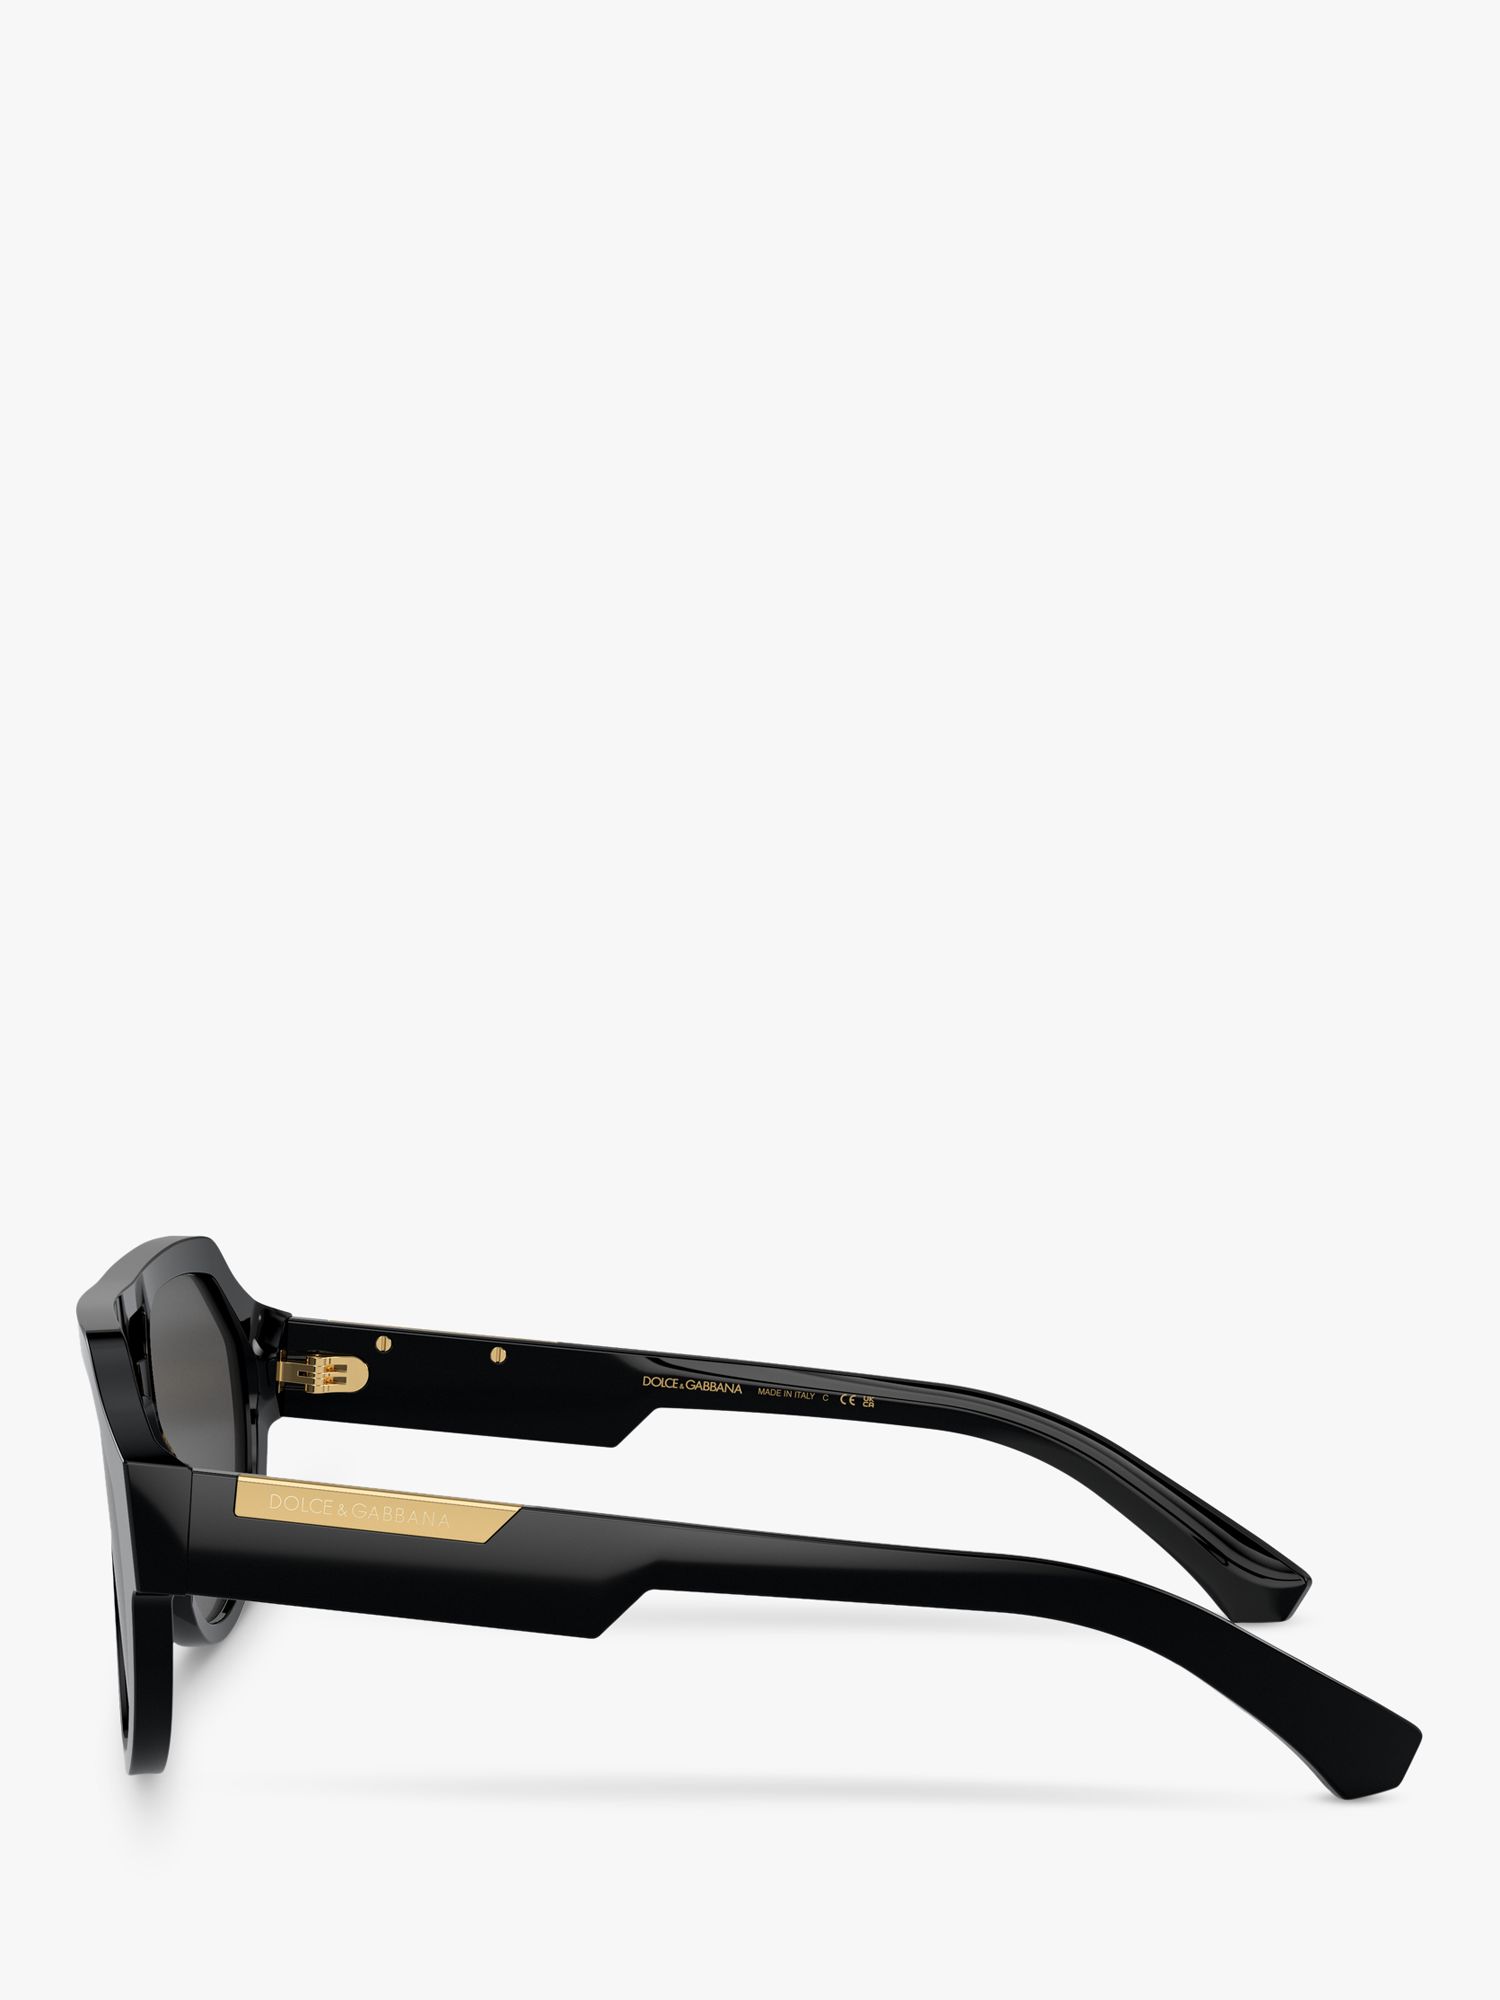 Dolce & Gabbana DG4466 Men's Aviator Sunglasses, Black/Grey